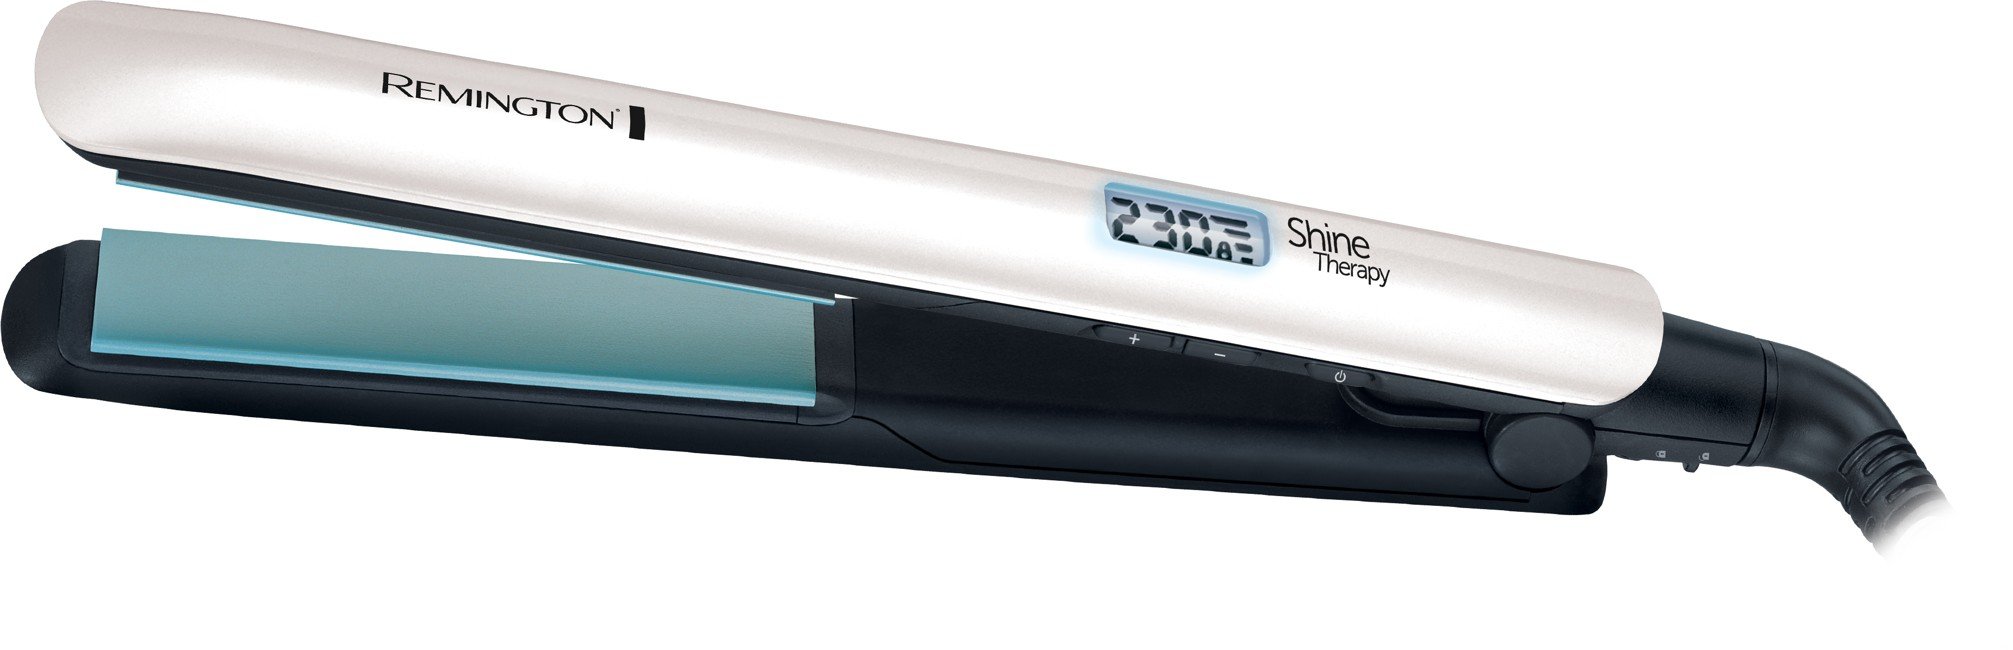 Remington - Shine Therapy Straightener S8500